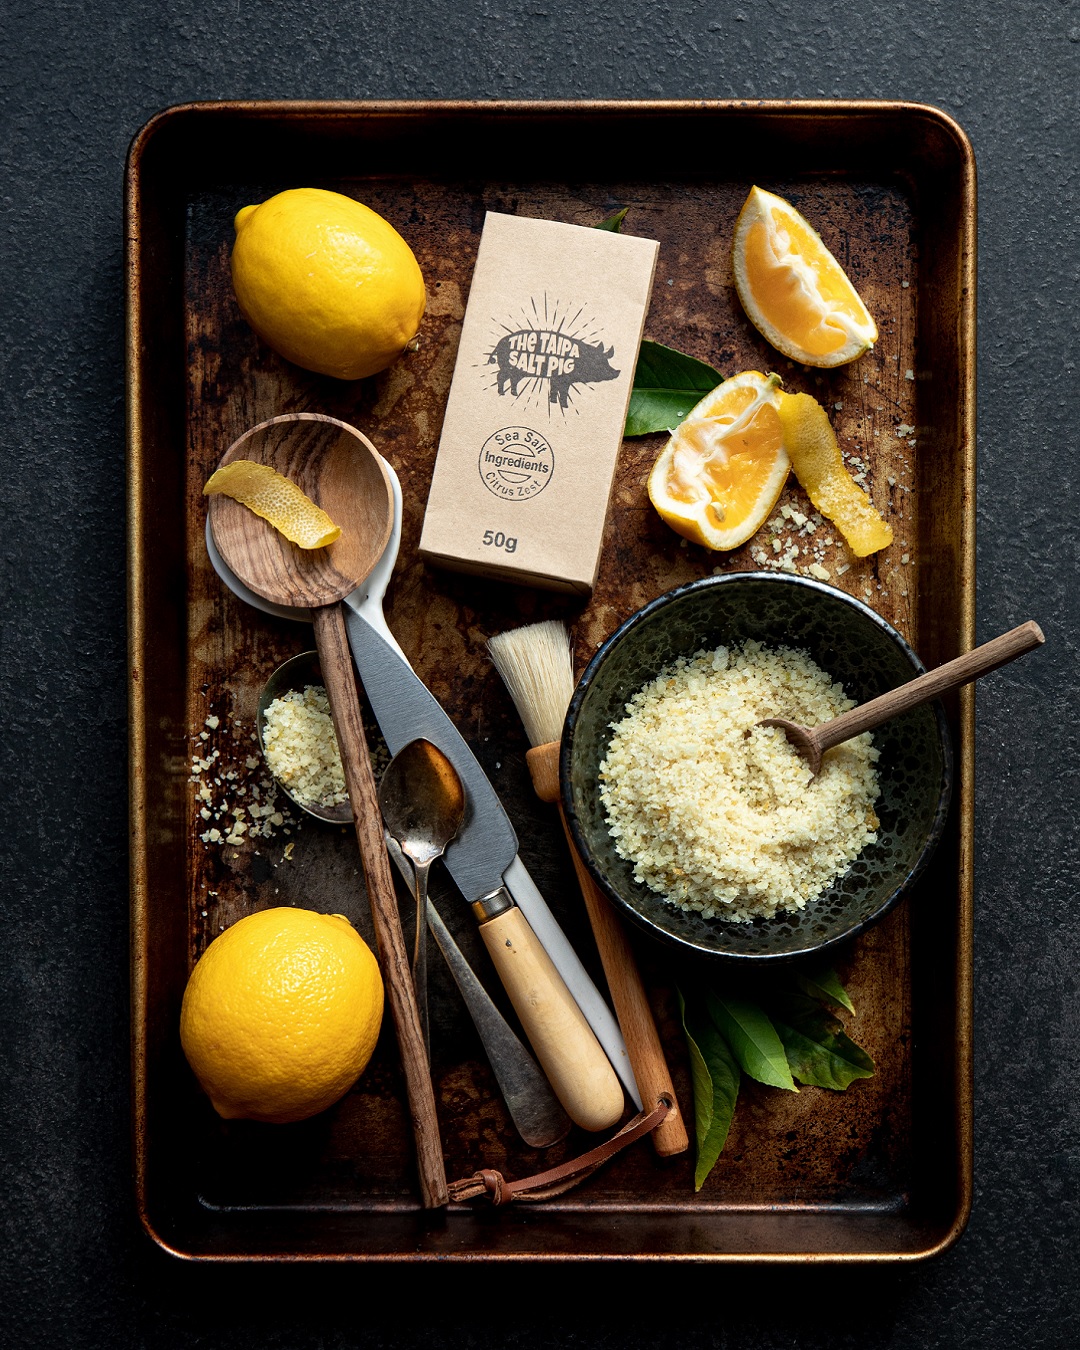 50g bag of Taipa pig citrus salt on tray with lemon, bowl of salt, knives and spoon